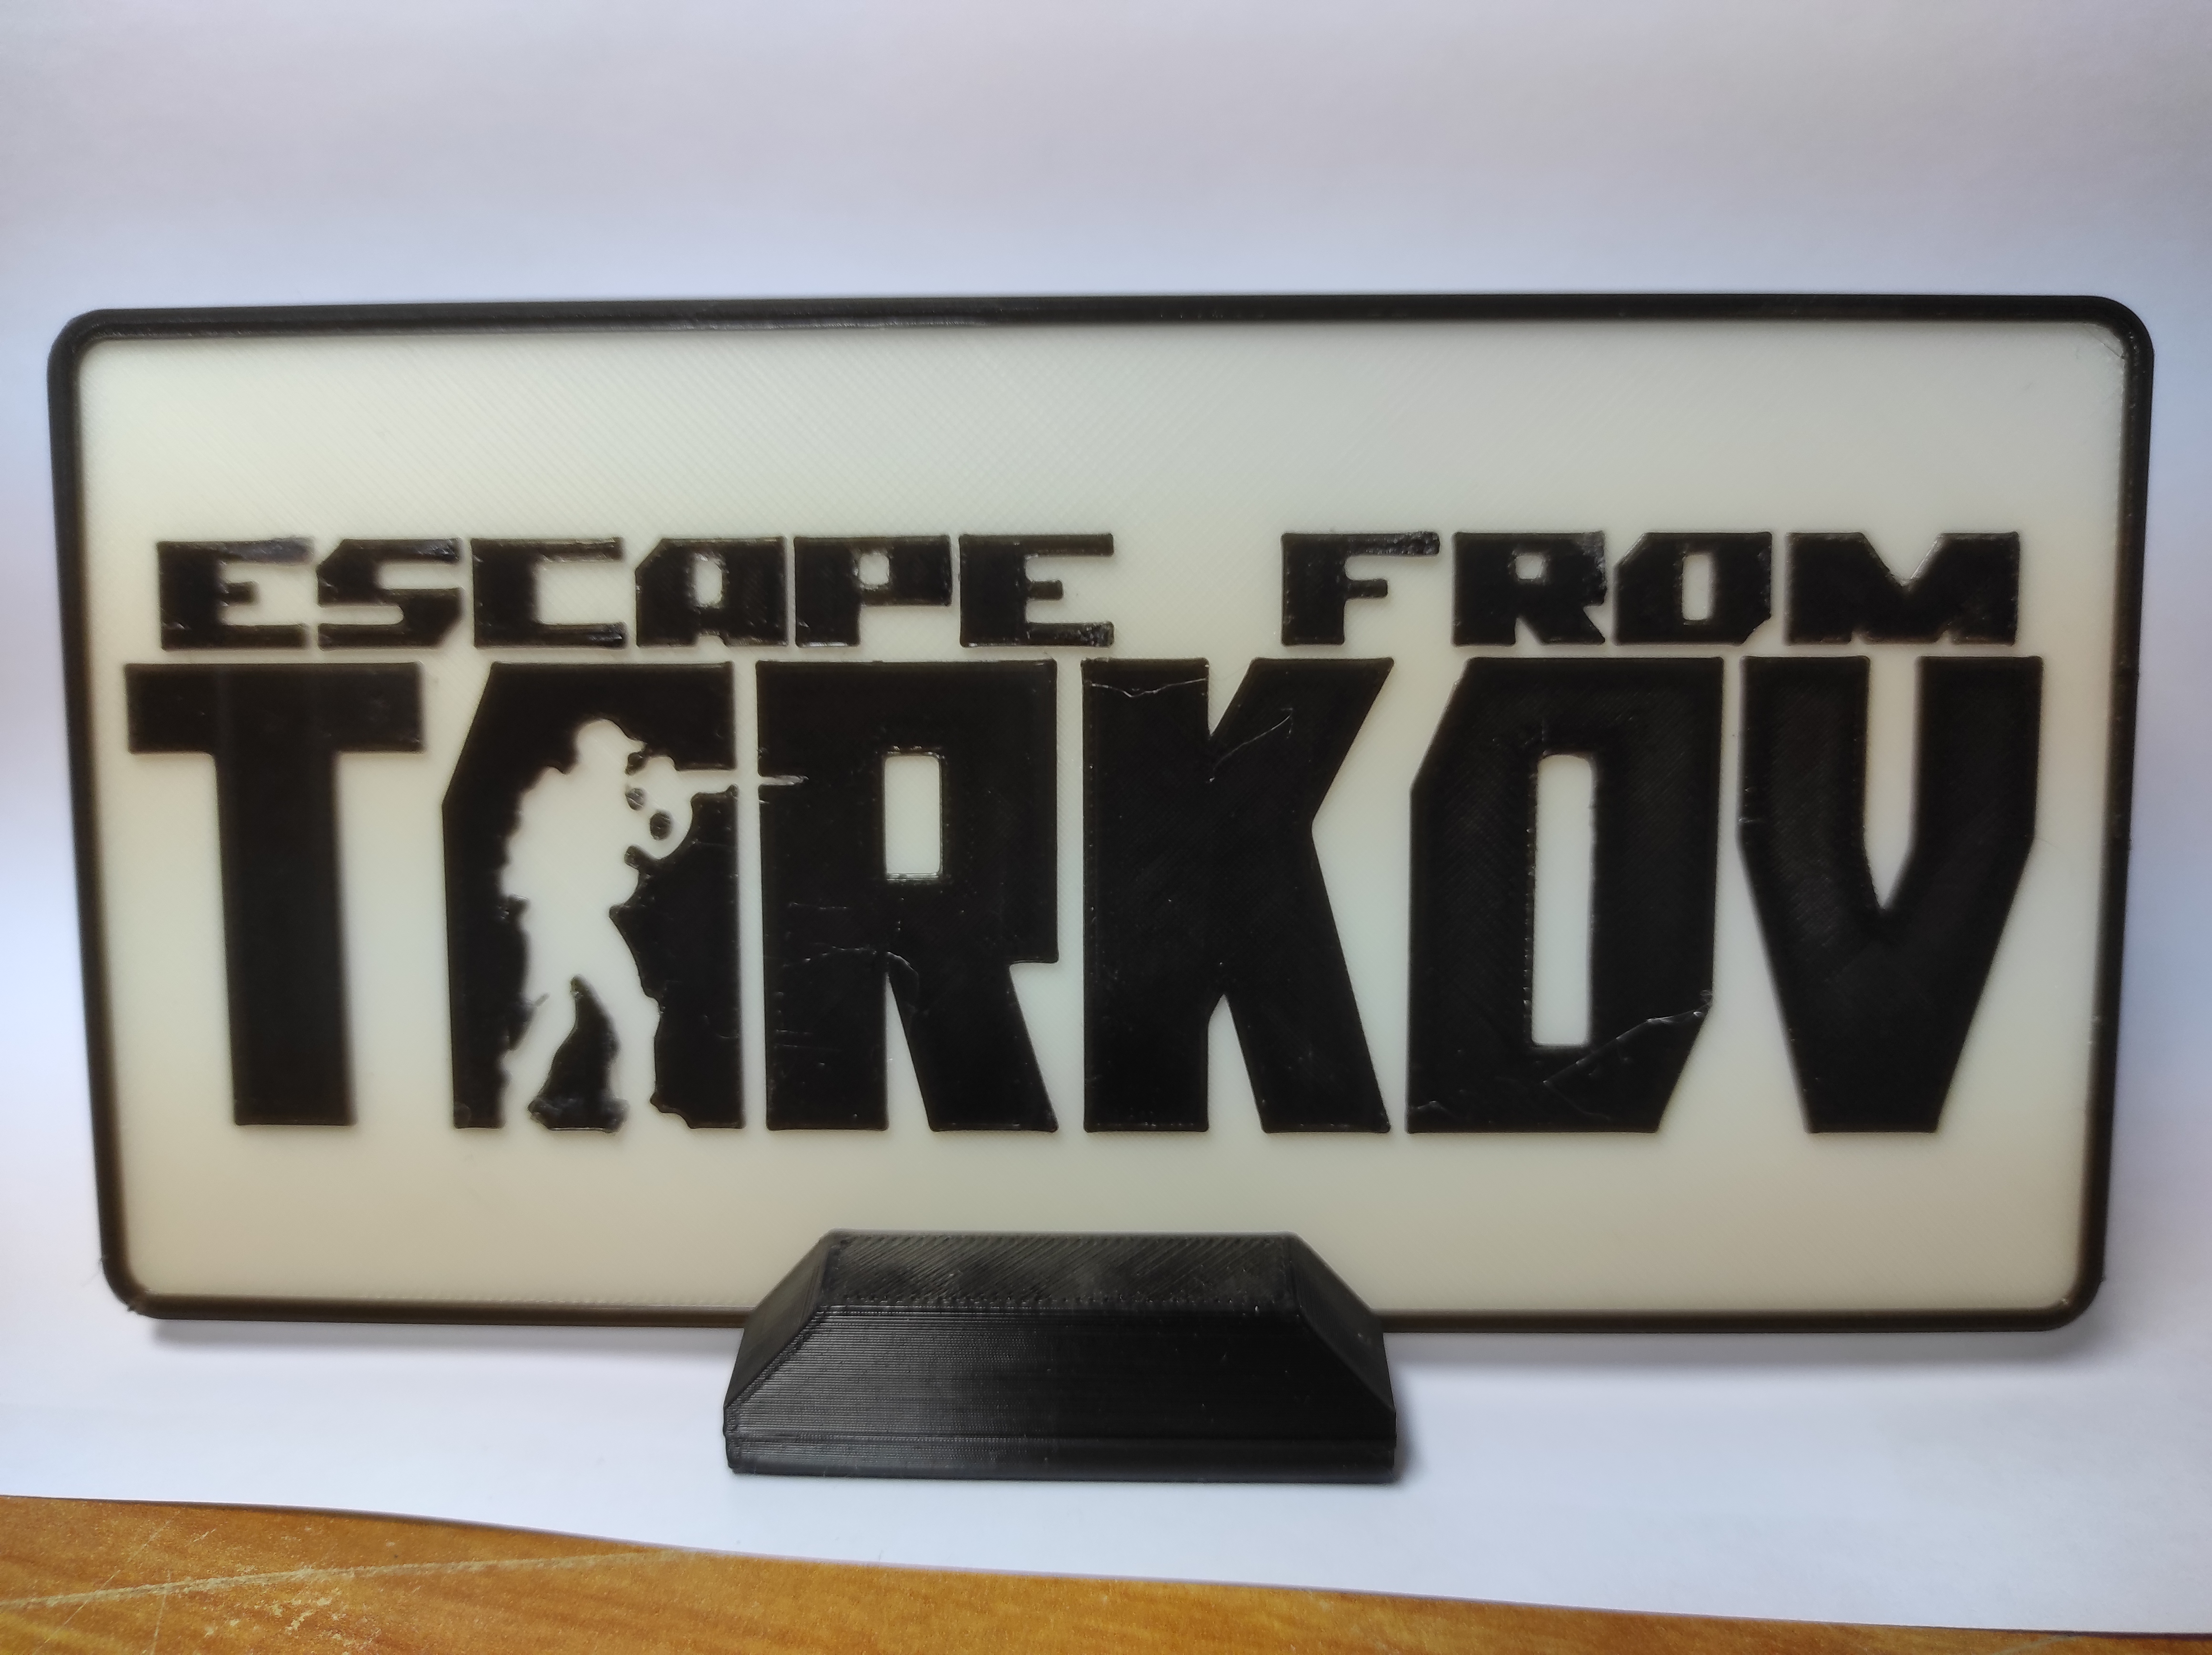 Escape form Tarkov sign